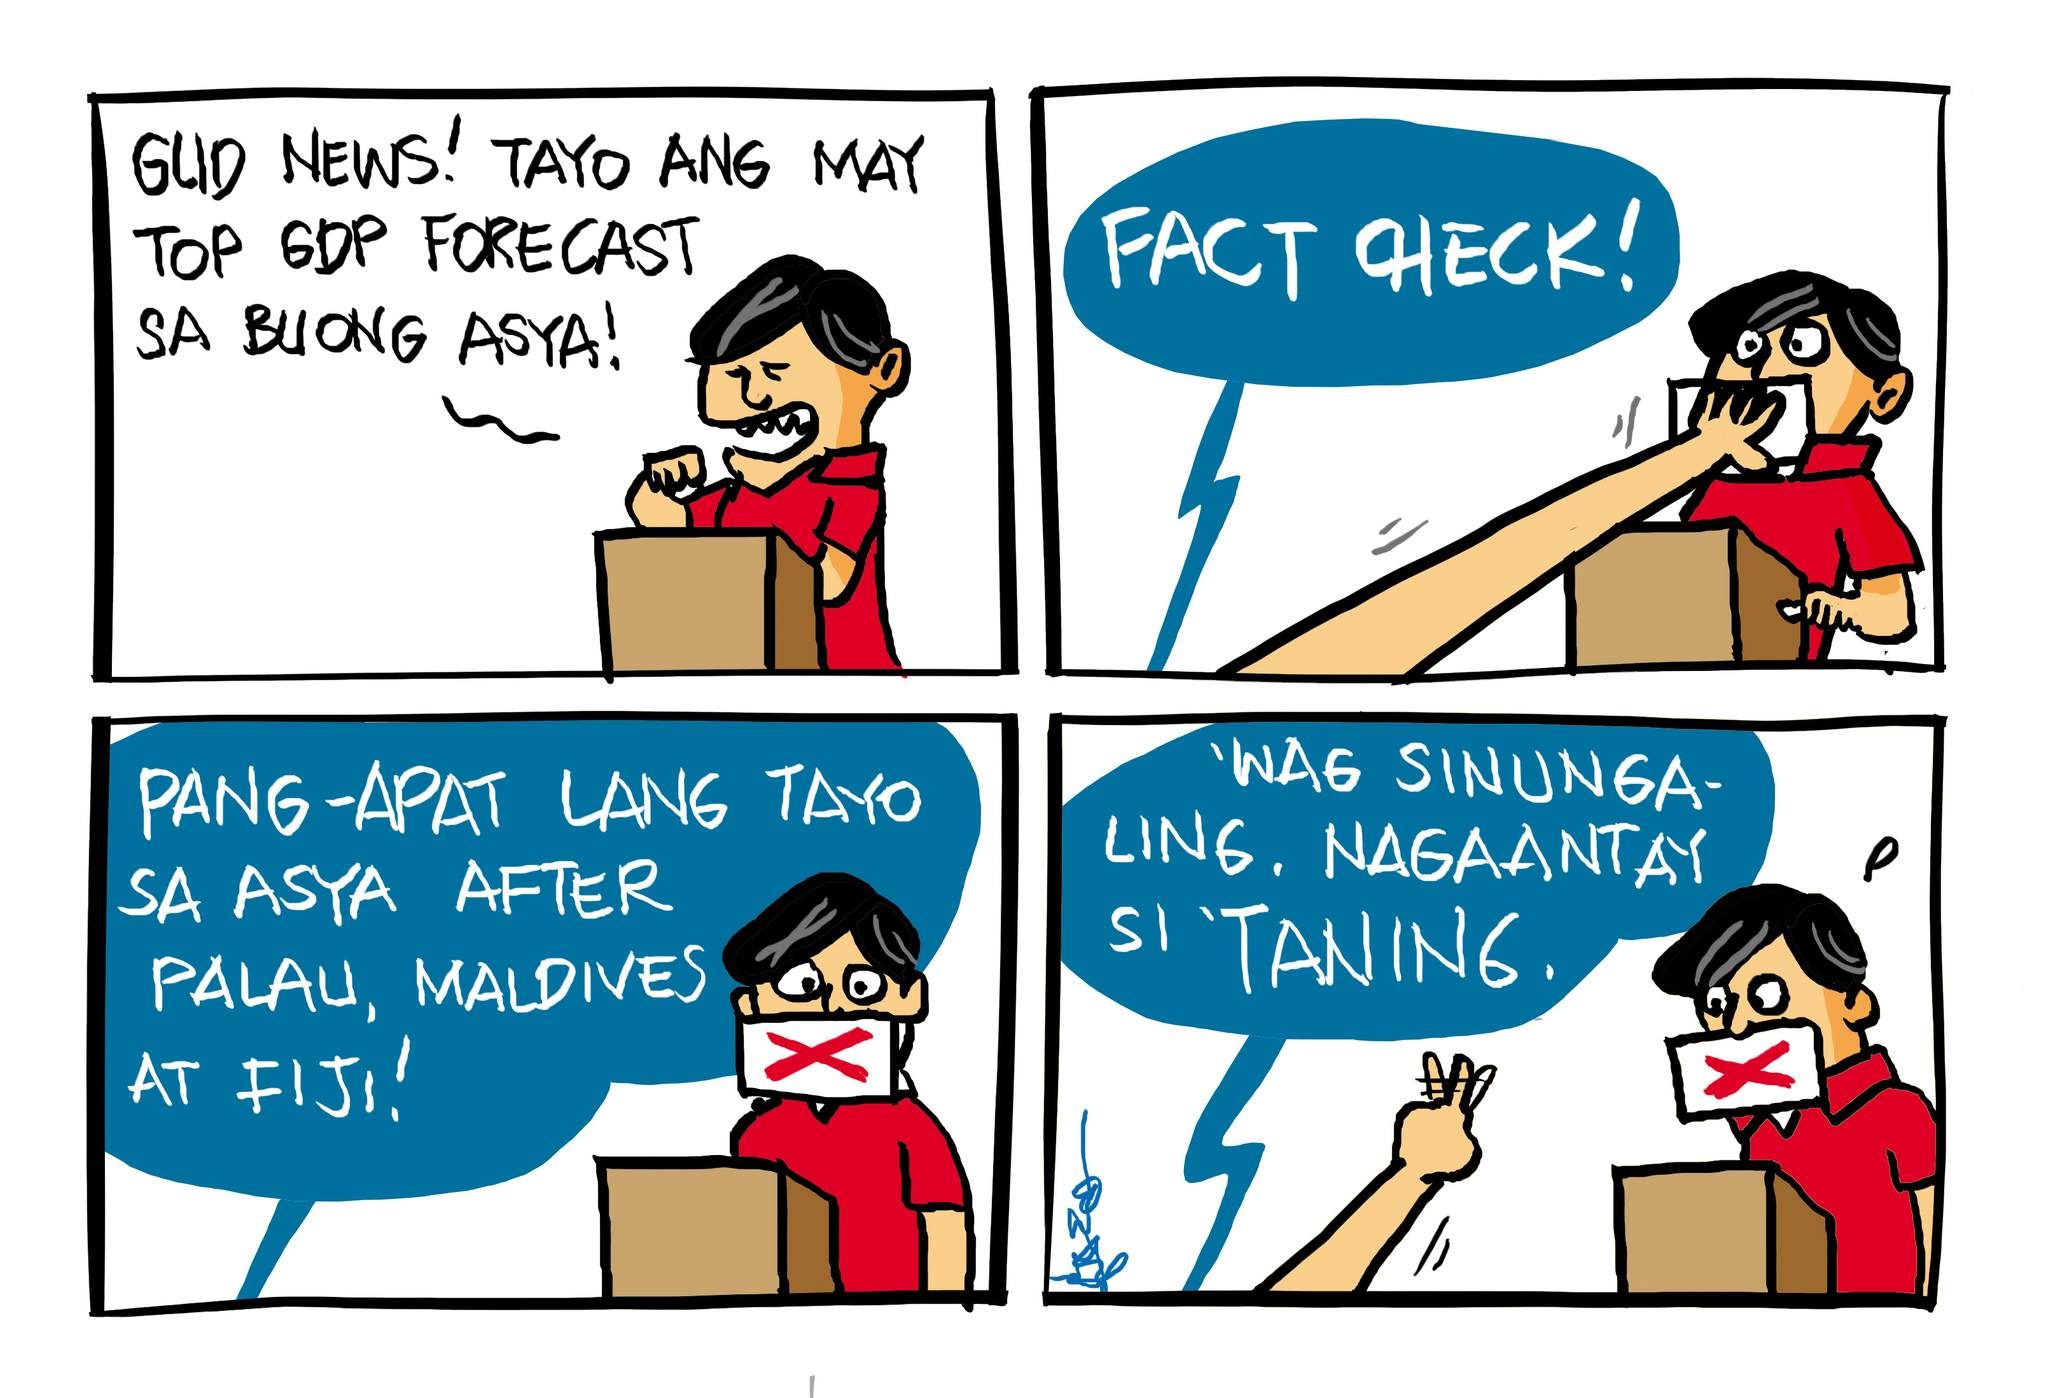 Pilipinas nga ba ang may pinakamataas na GDP forecast sa buong Asya?